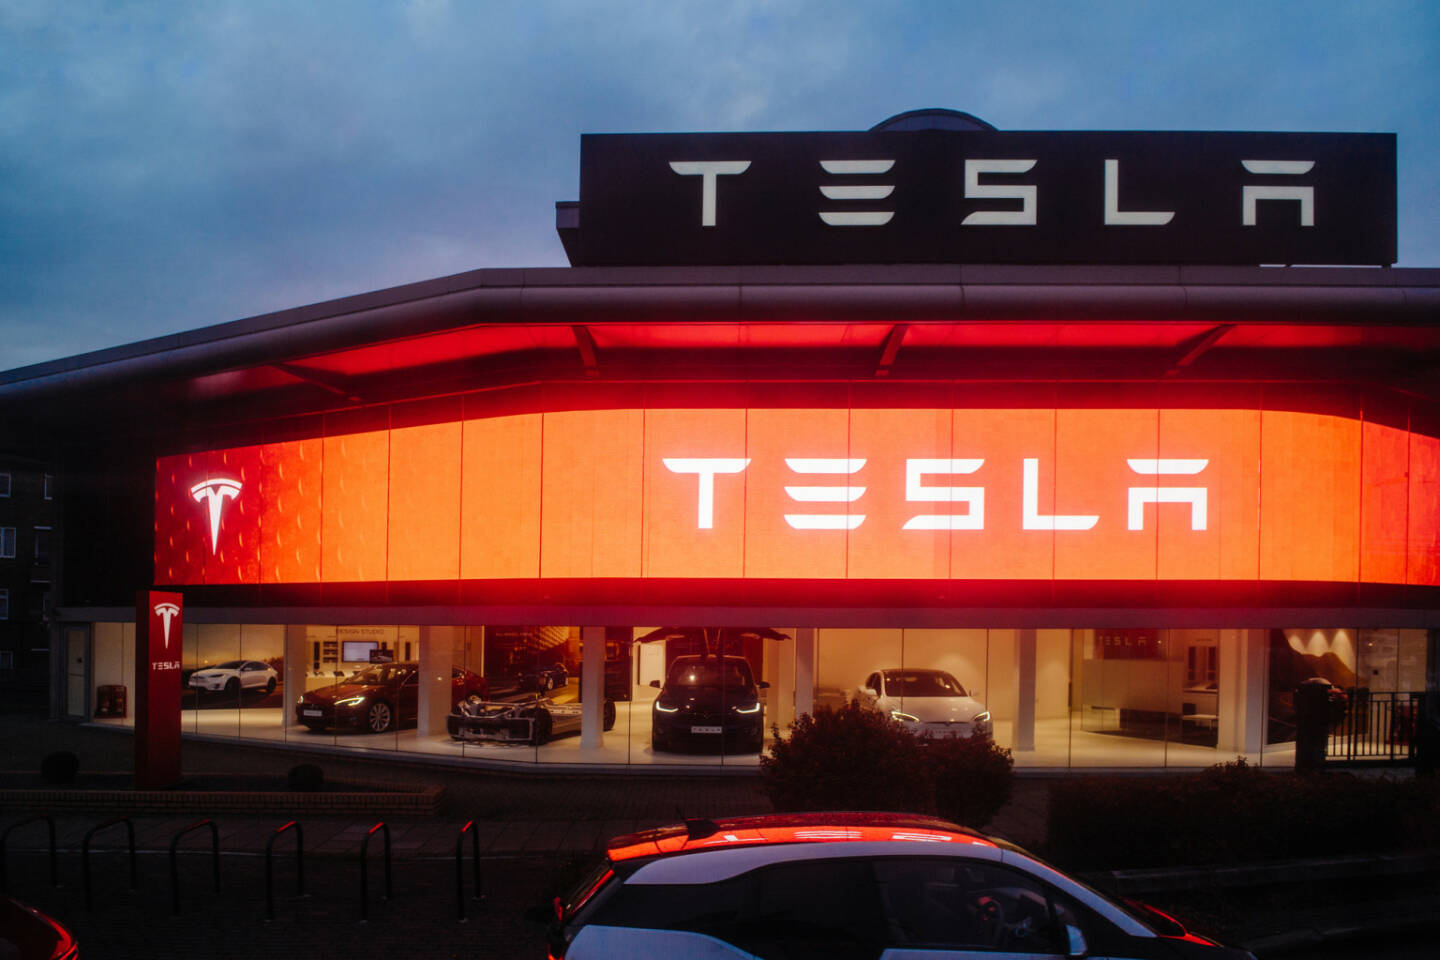 Tesla, Autohaus, Autos - https://de.depositphotos.com/158143436/stock-photo-tesla-motors-showroom-with-cars.html